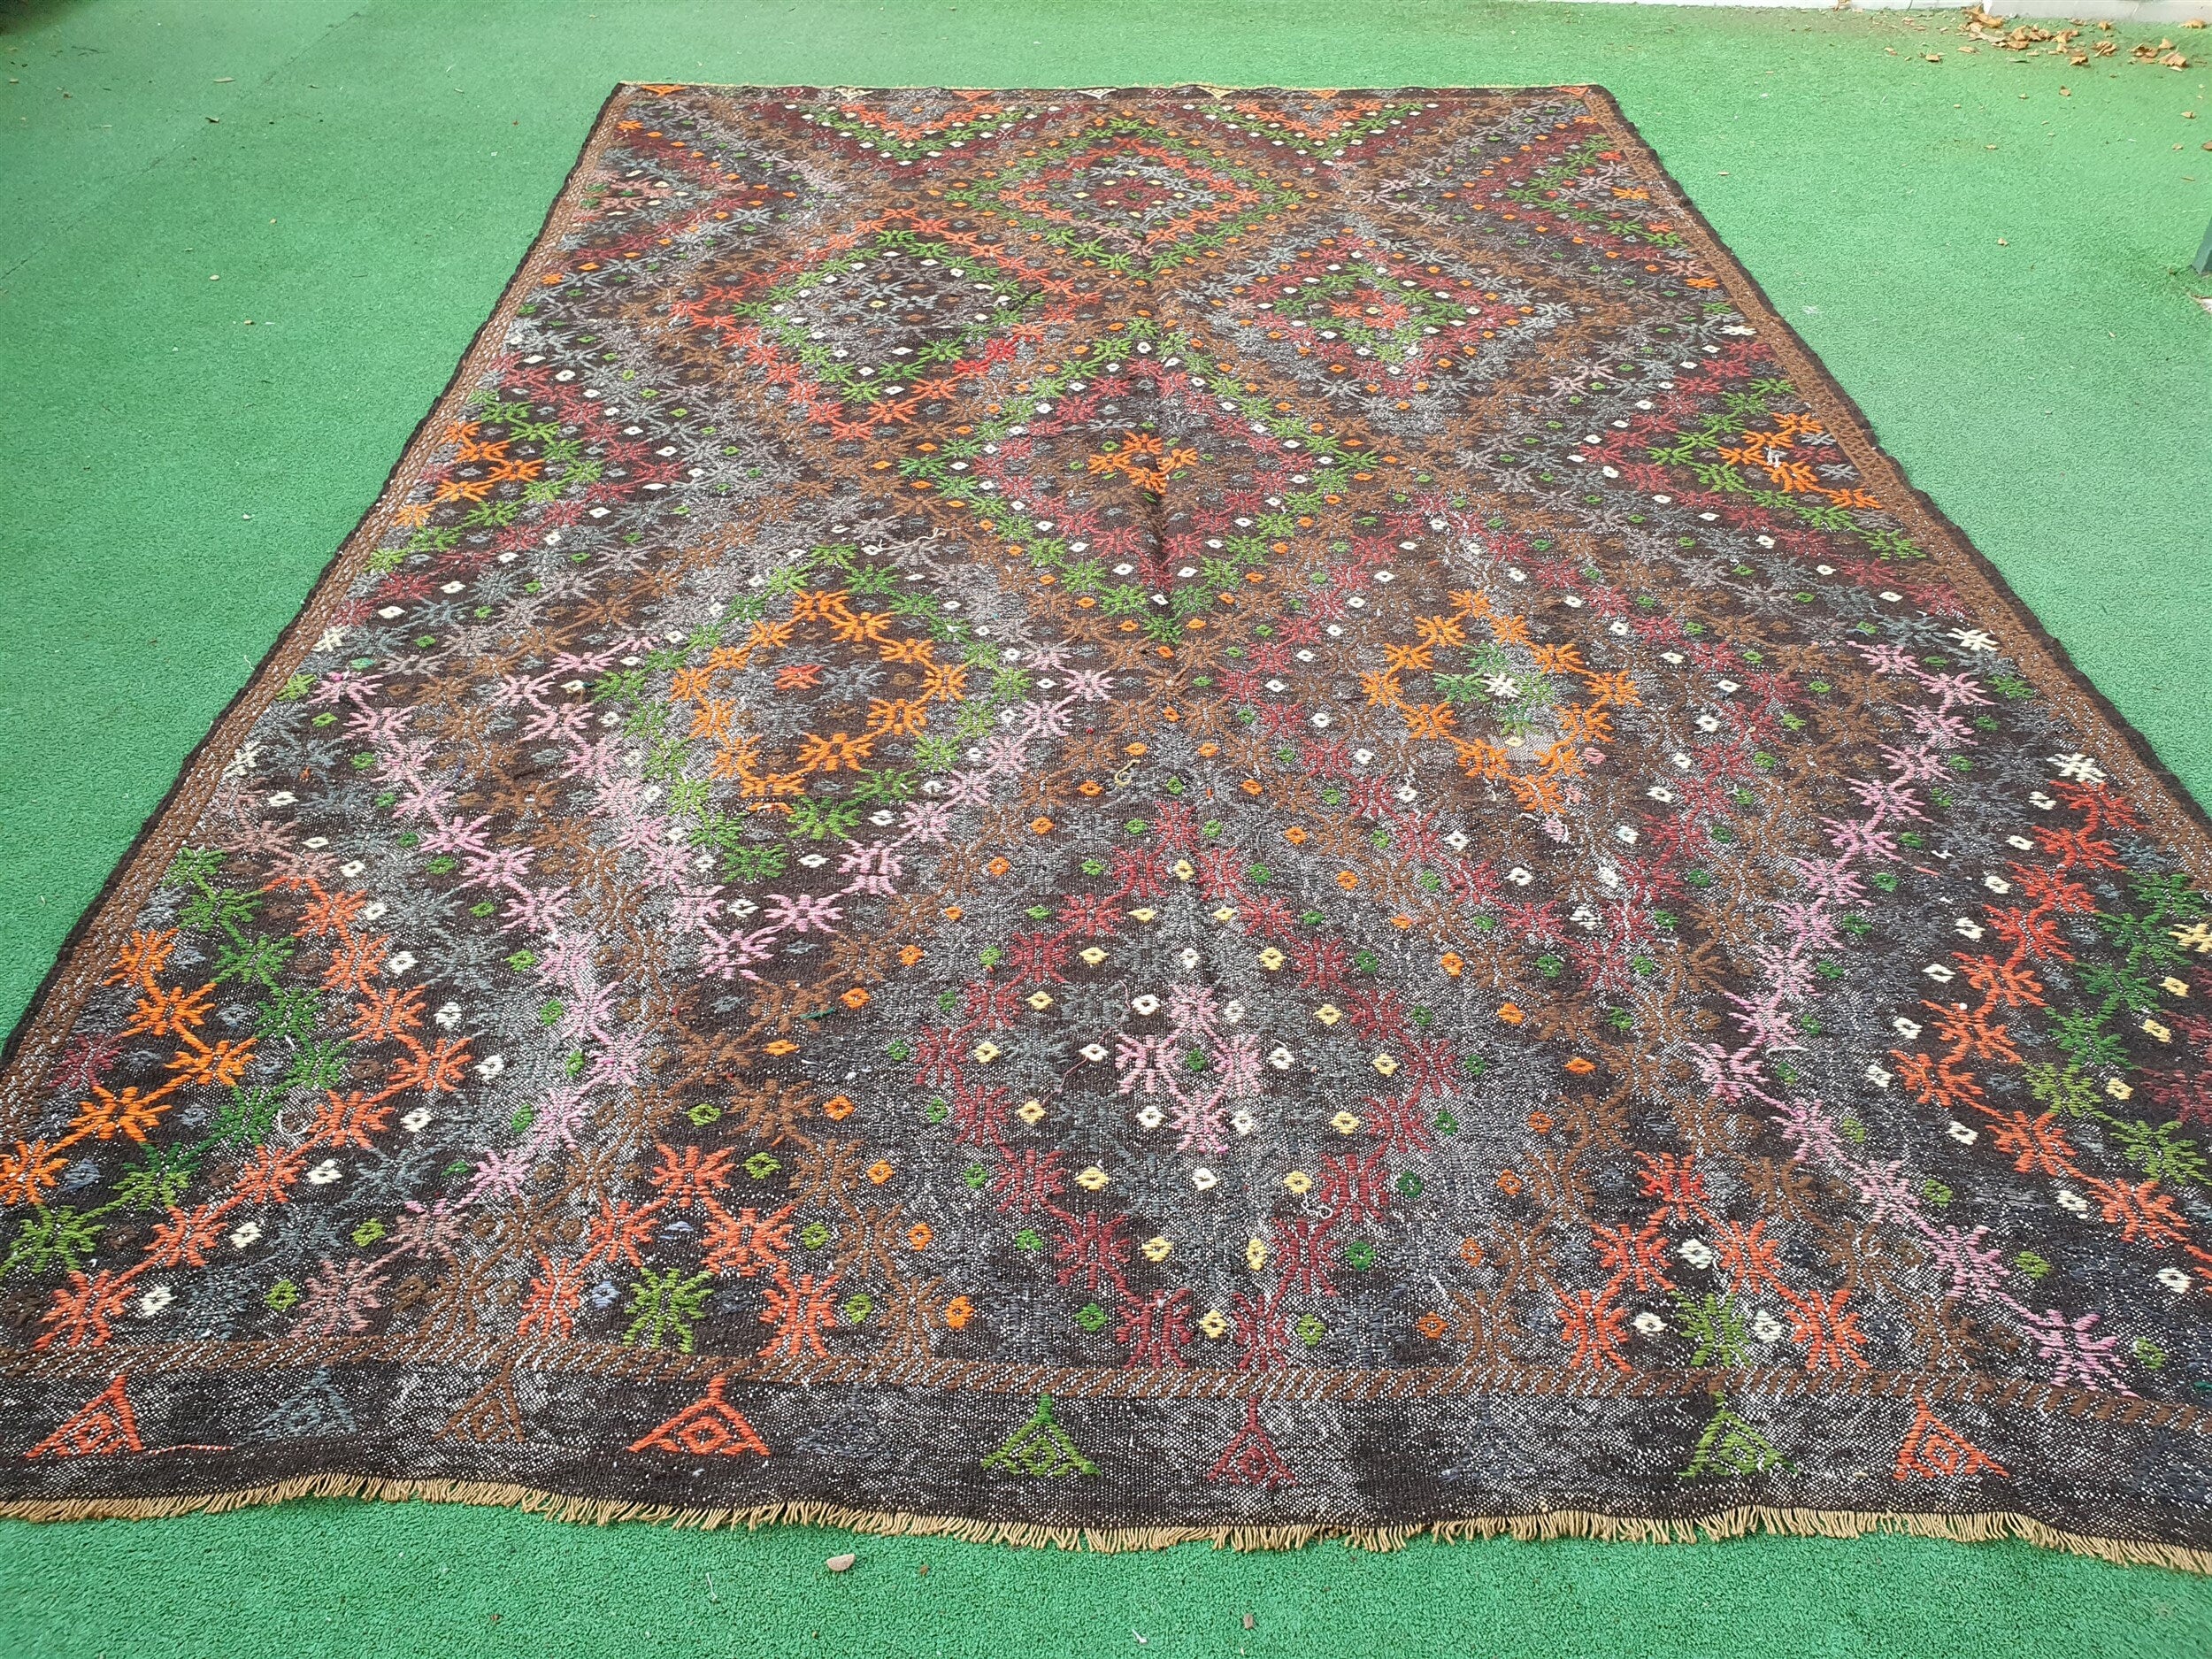 Vintage Decor Persian Area Kilim Living Room, Moroccan Style Handwoven Wool Rug, Bohemian Decor Rustic Rug, Colorful Turkish Rug 11.6*7.6 ft